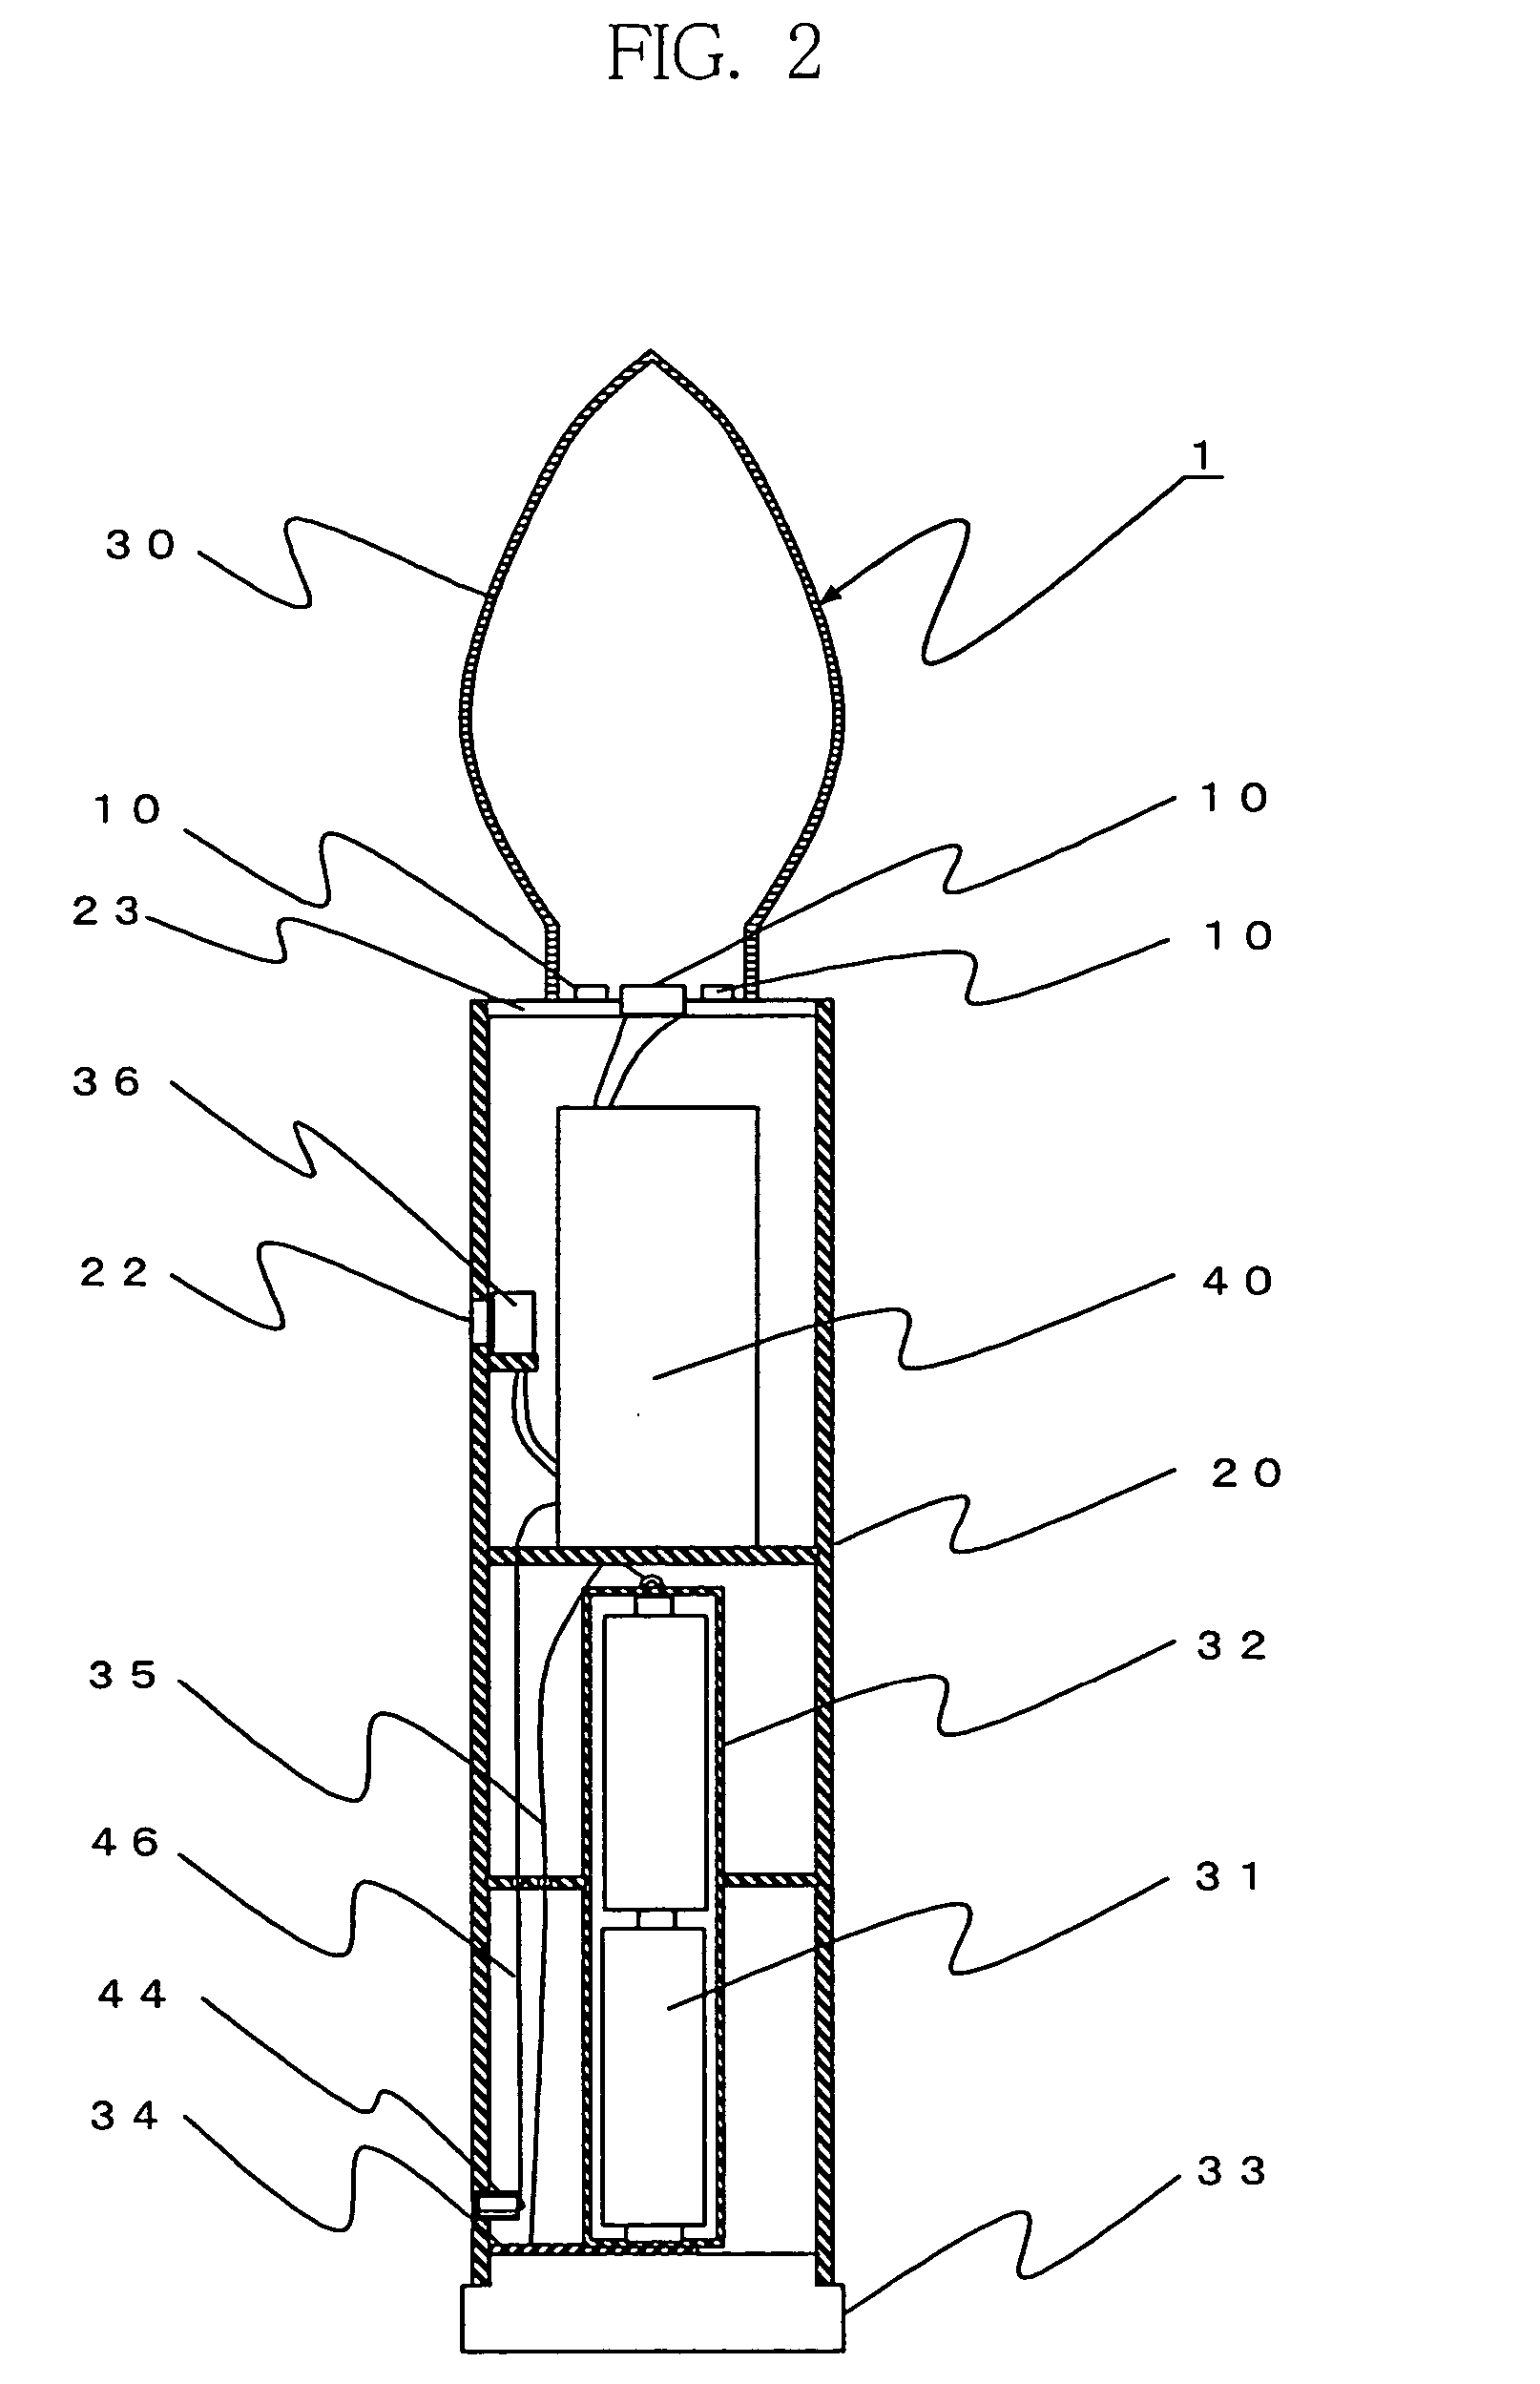 Imitation flame generating apparatus and method